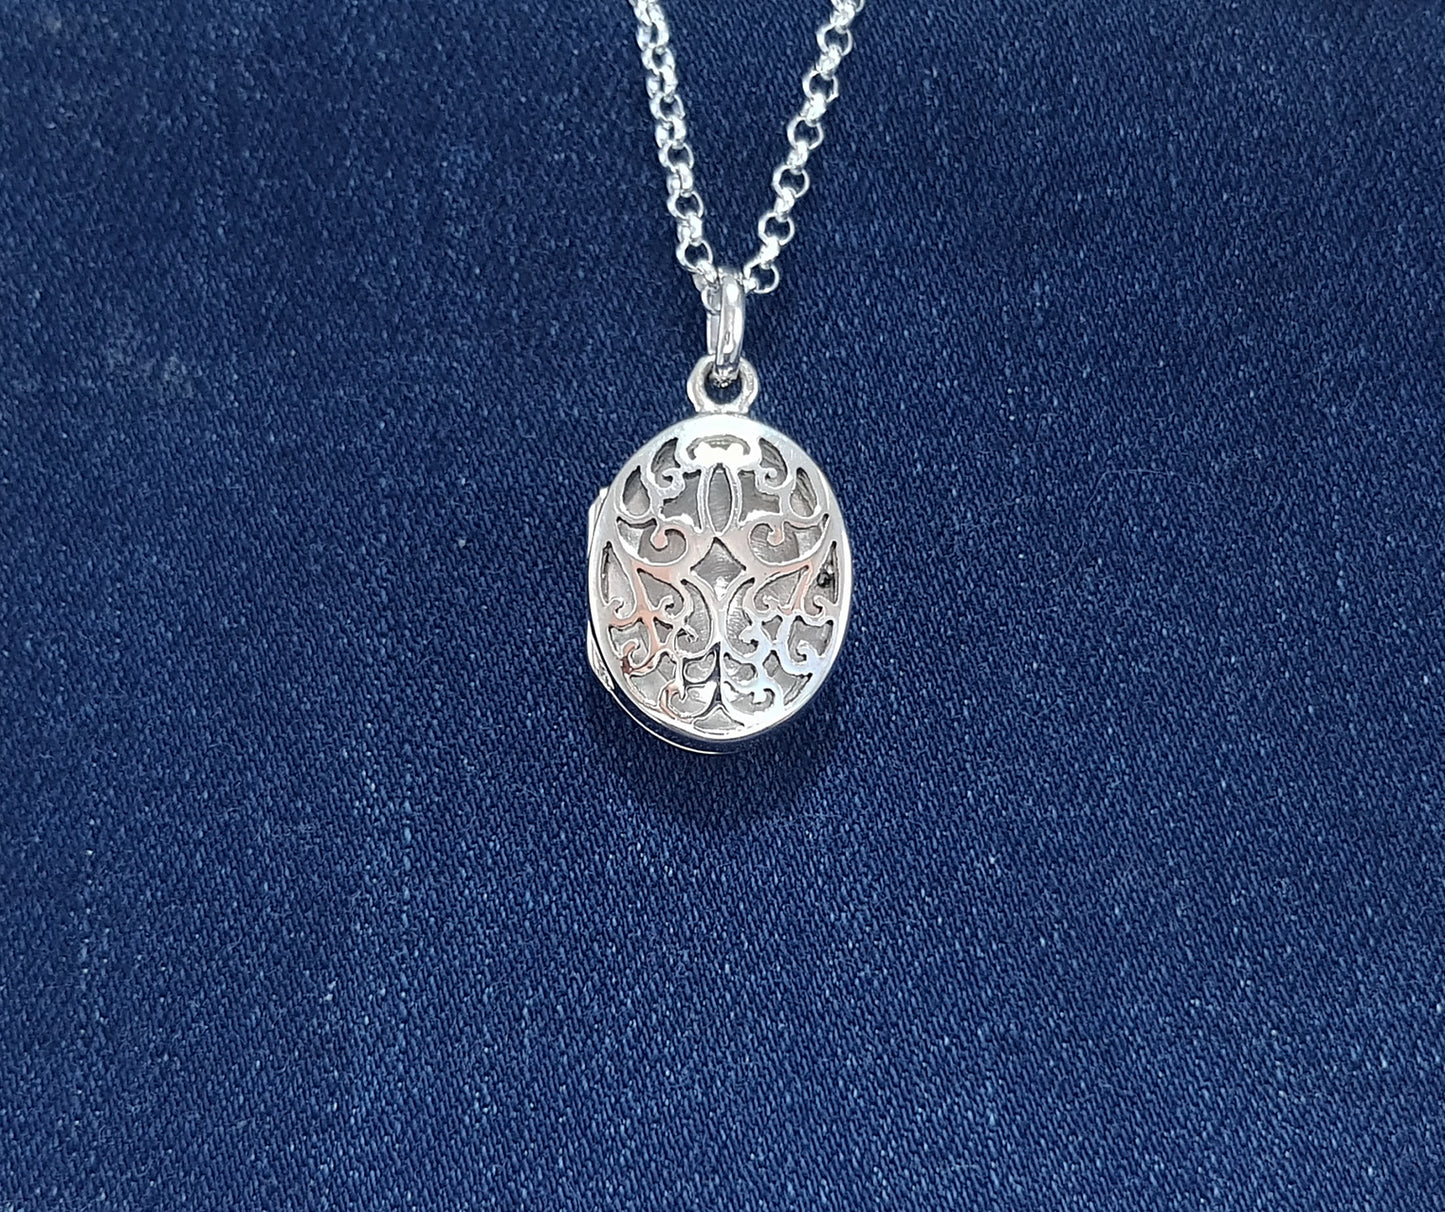 silver oval locket - filigree pattern